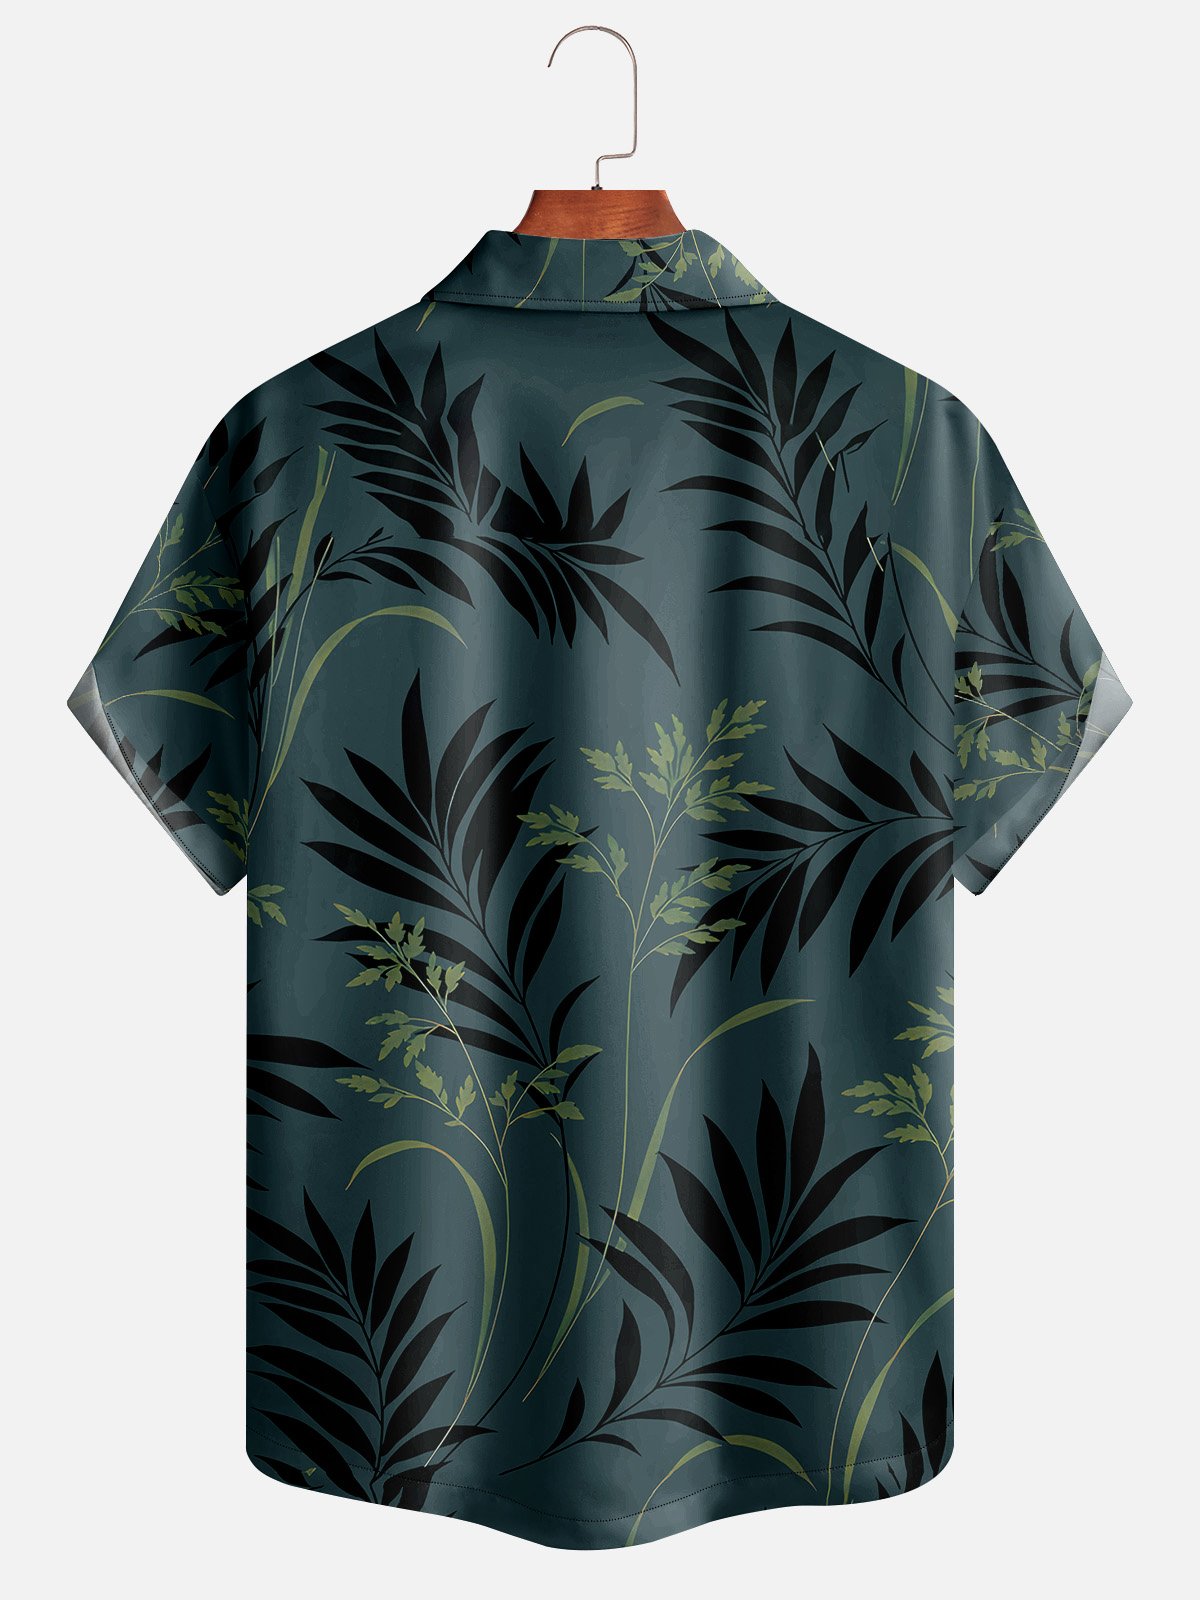 Hardaddy Palm Tree Leaf Shirt Men Summer Leaf Vacation Micro-Elasticity Daily Short Sleeve Regular H-Line Camp Collar Aloha Shirts